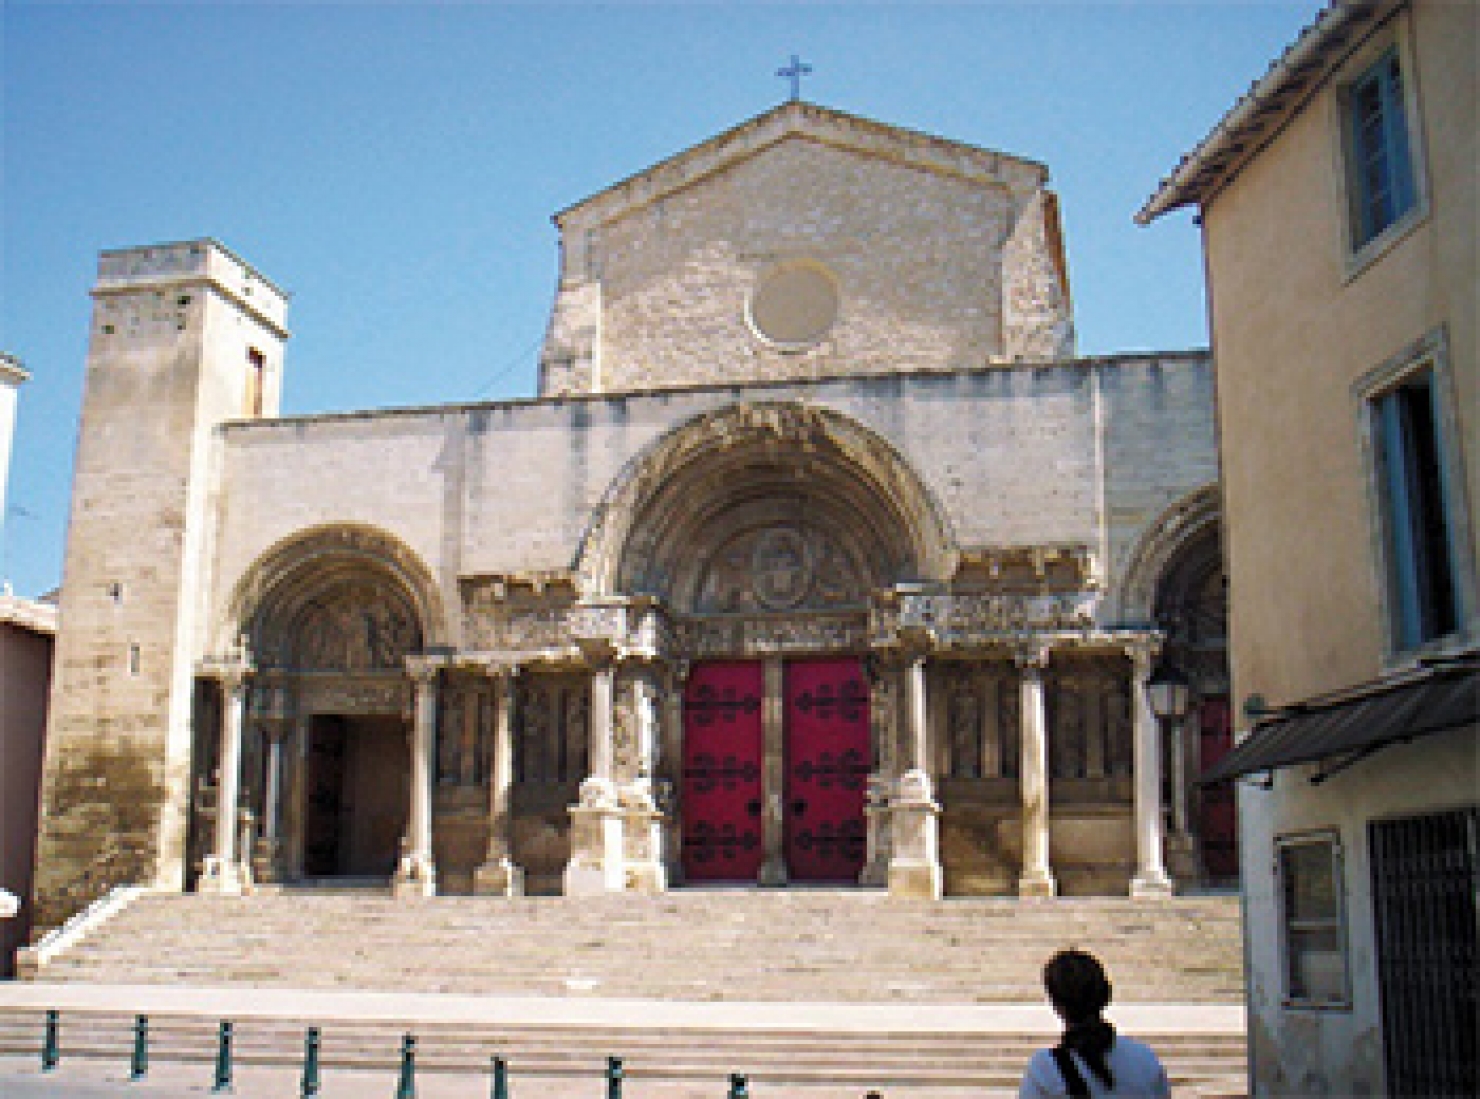 Fassade der Abteikirche Saint-Gilles, als UNESCO-Weltkultuerbe klassifiziert